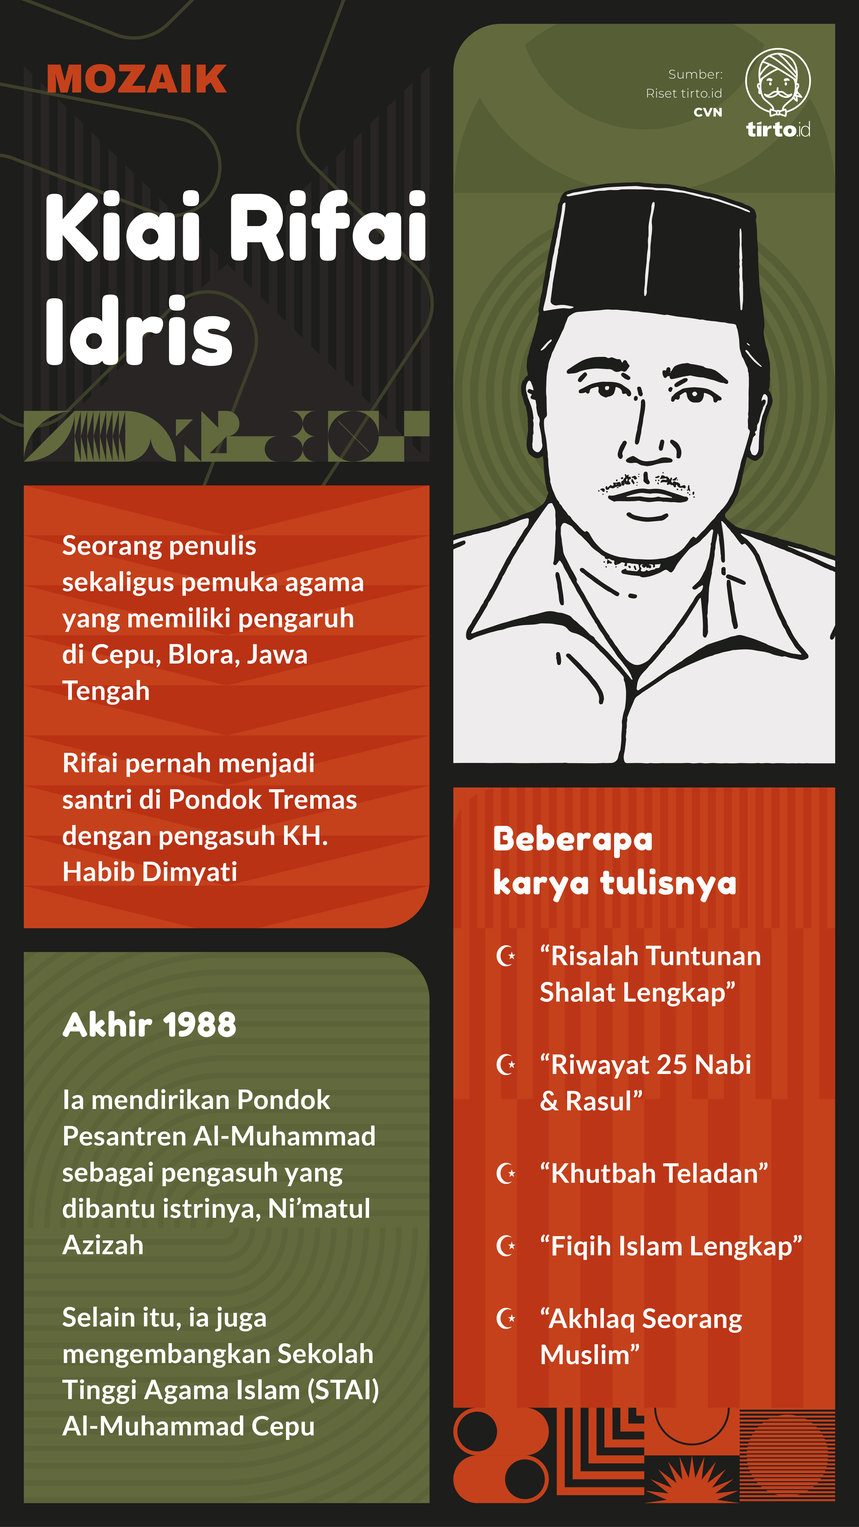 Infografik Mozaik Kiai Rifai Idris